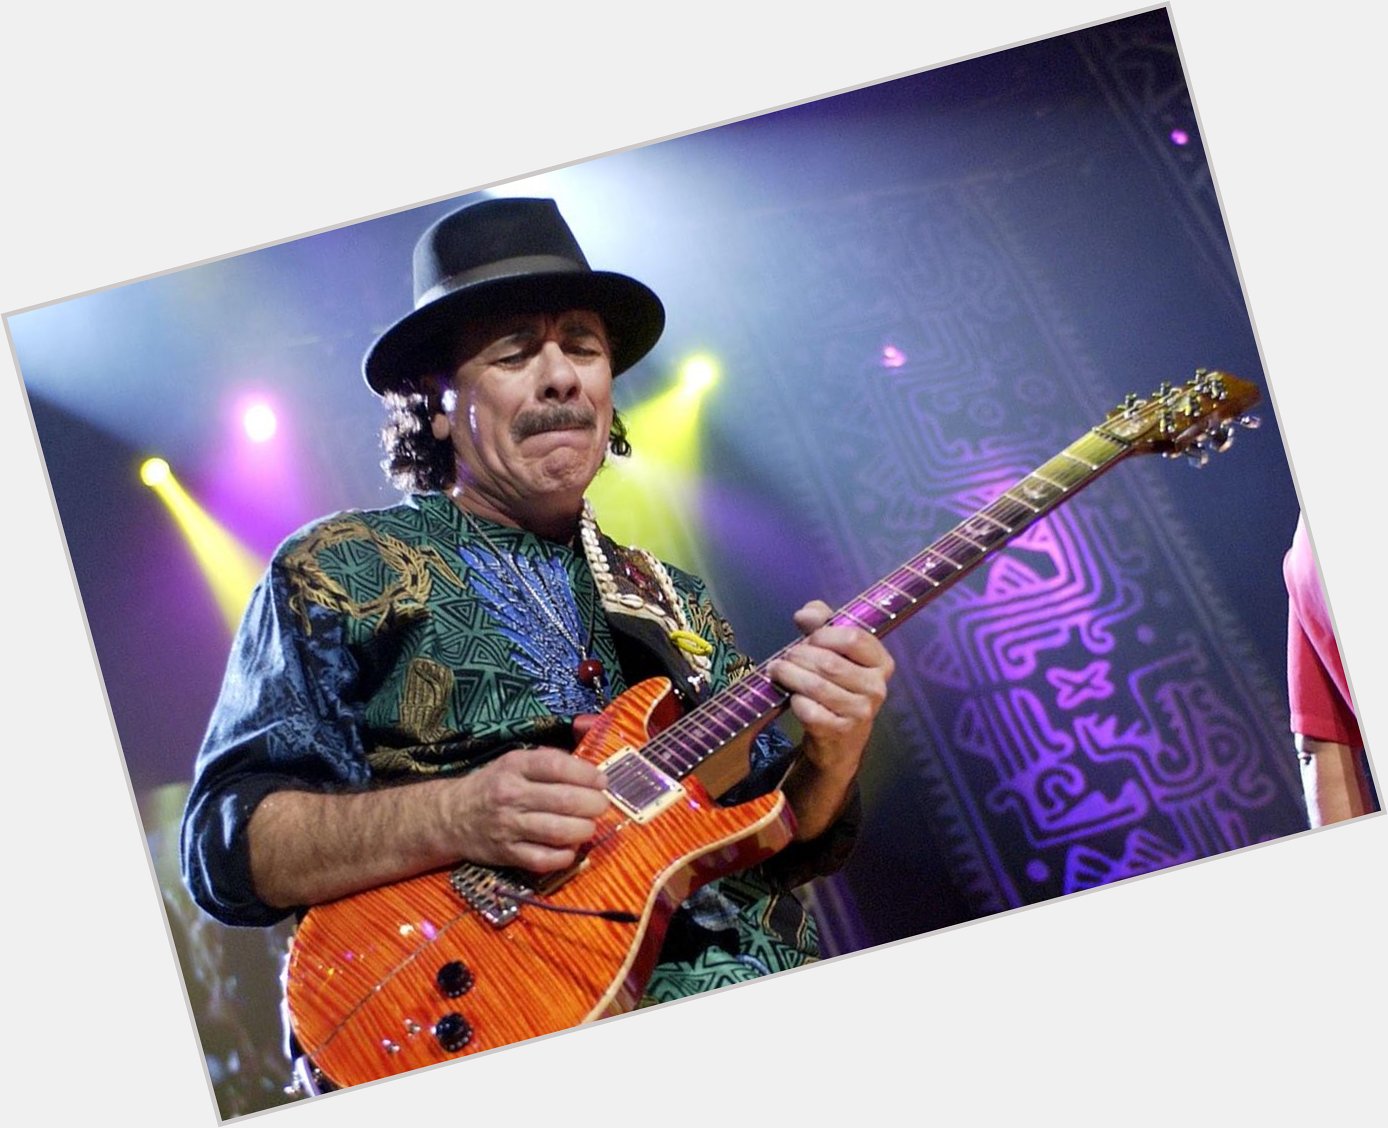 Happy birthday to guitarist Carlos Santana, born on 20th July 1947. 